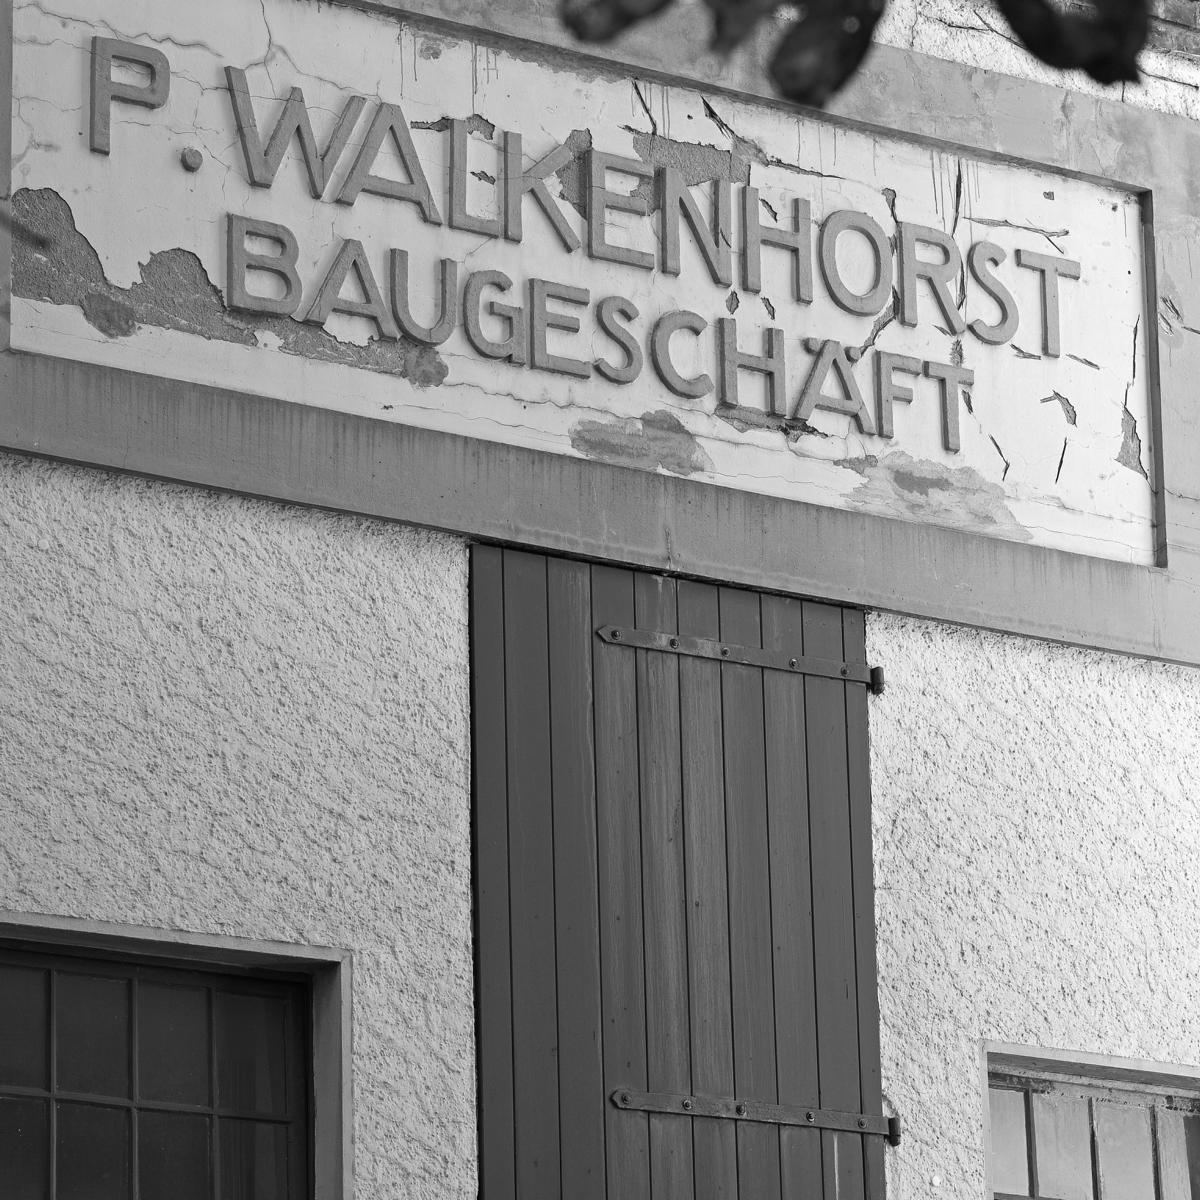 Walkenhorst Baugeschaeft